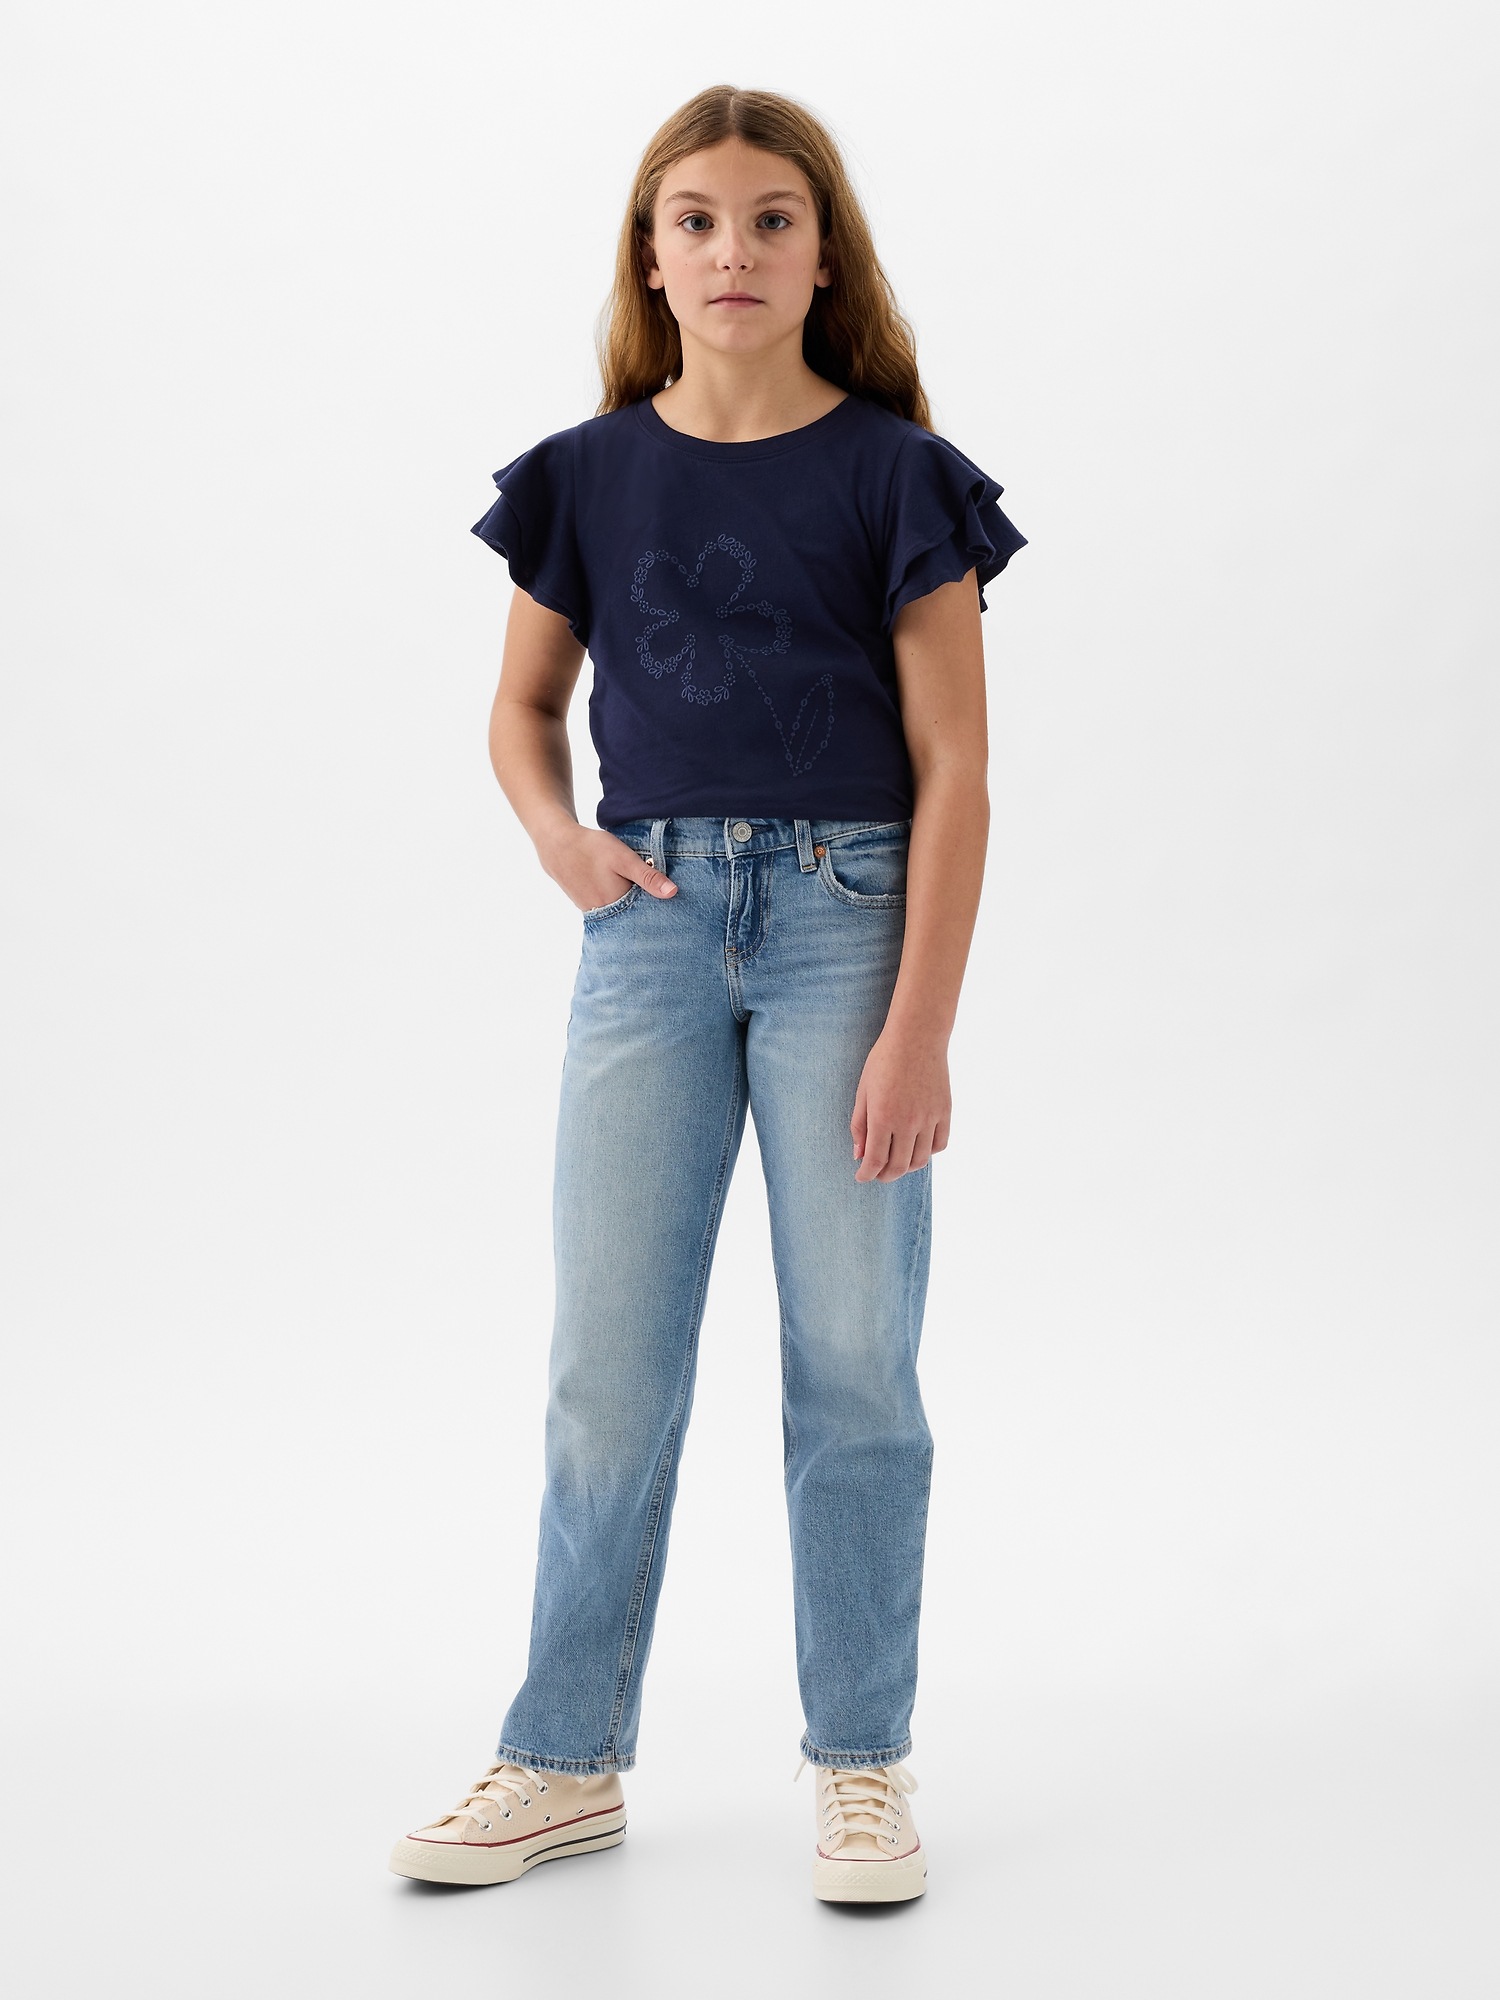 2pcs Girls Ruffle Trim Cute Cartoon Unicorn Graphic T-shirt Top & * Hem  Elastic Waist Shorts Set Kids Summer Clothes